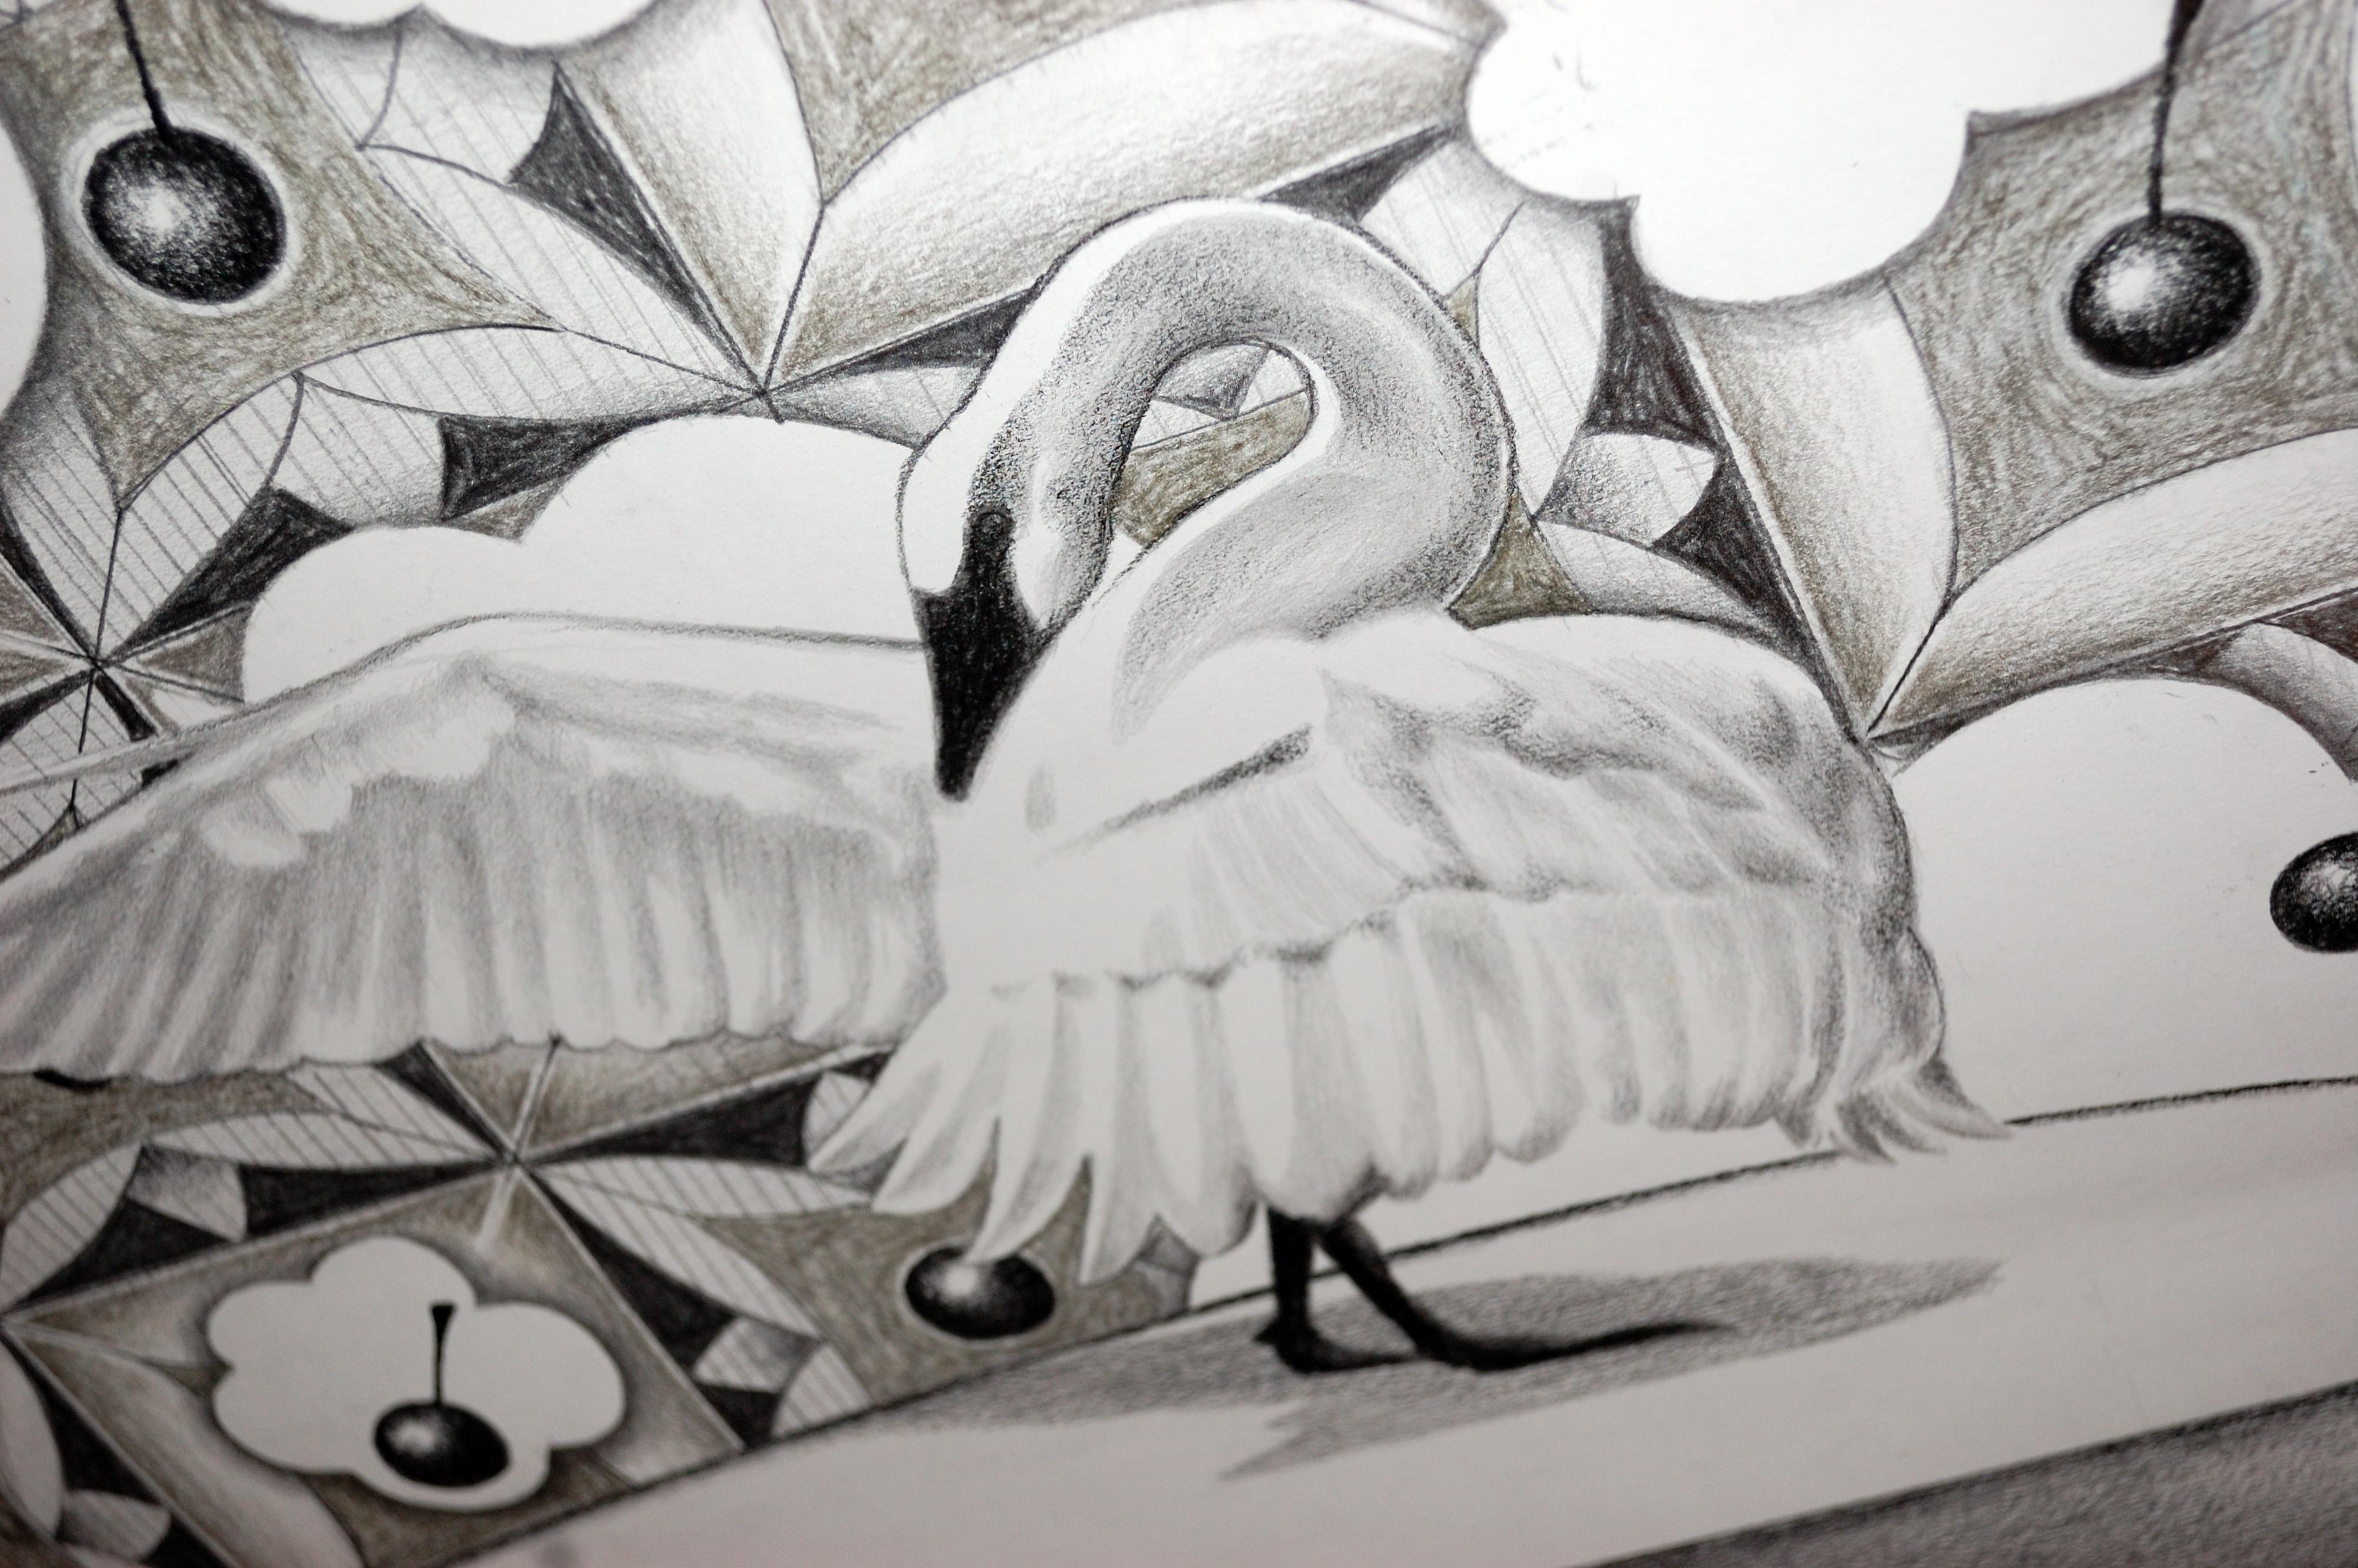 Swan and Cherries - Contemporary Figurative Elaborate Drawing, Large Format  - Gray Animal Art by Anna Malinowska